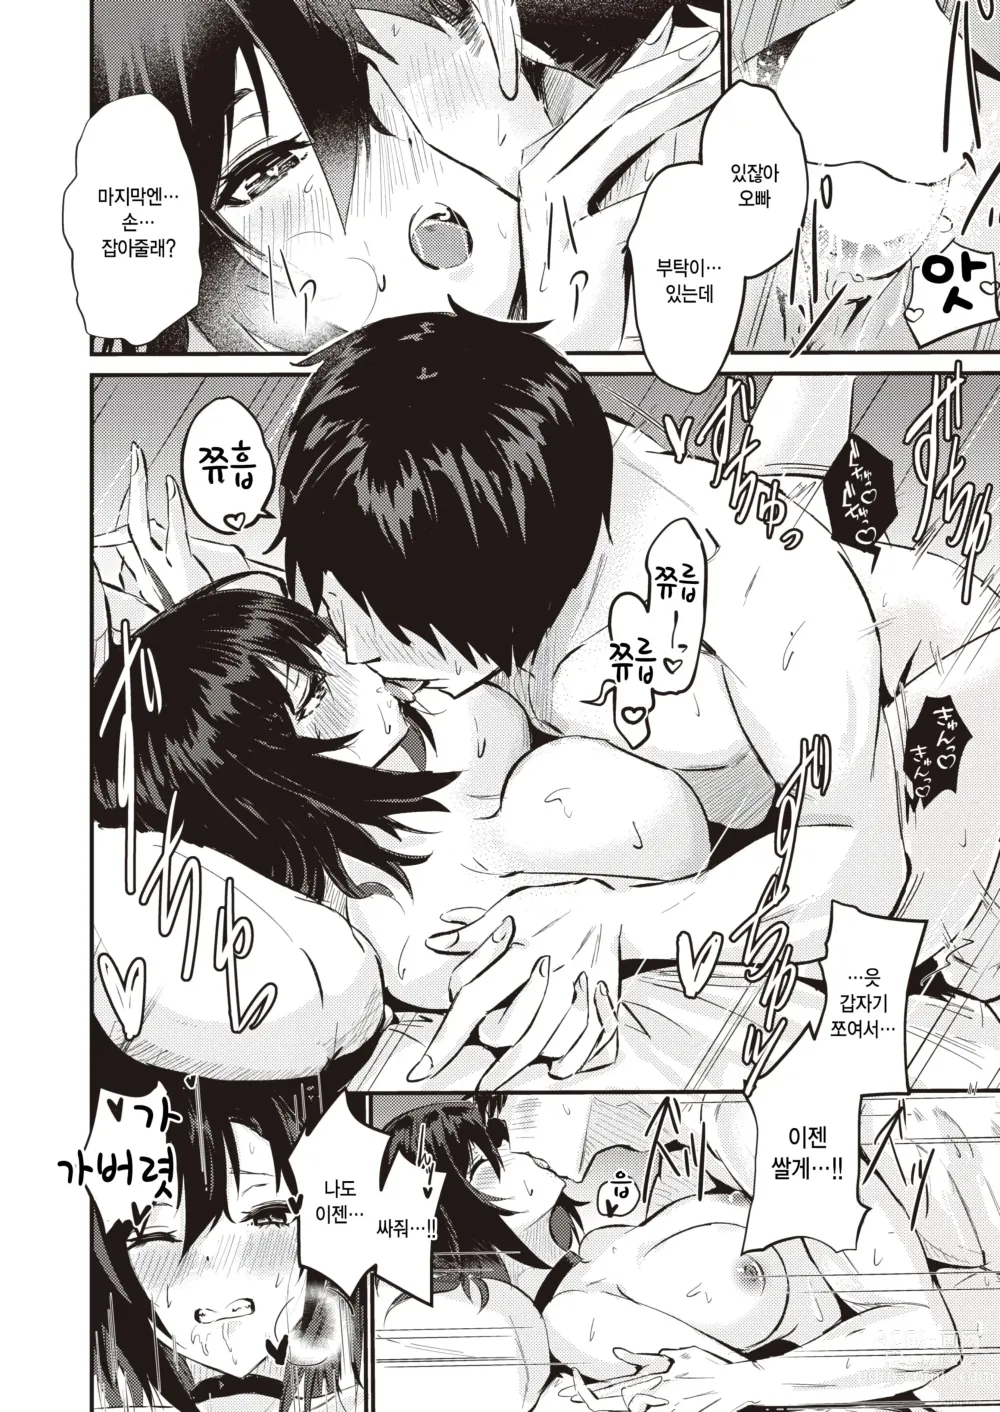 Page 22 of manga Neko to Kimagure